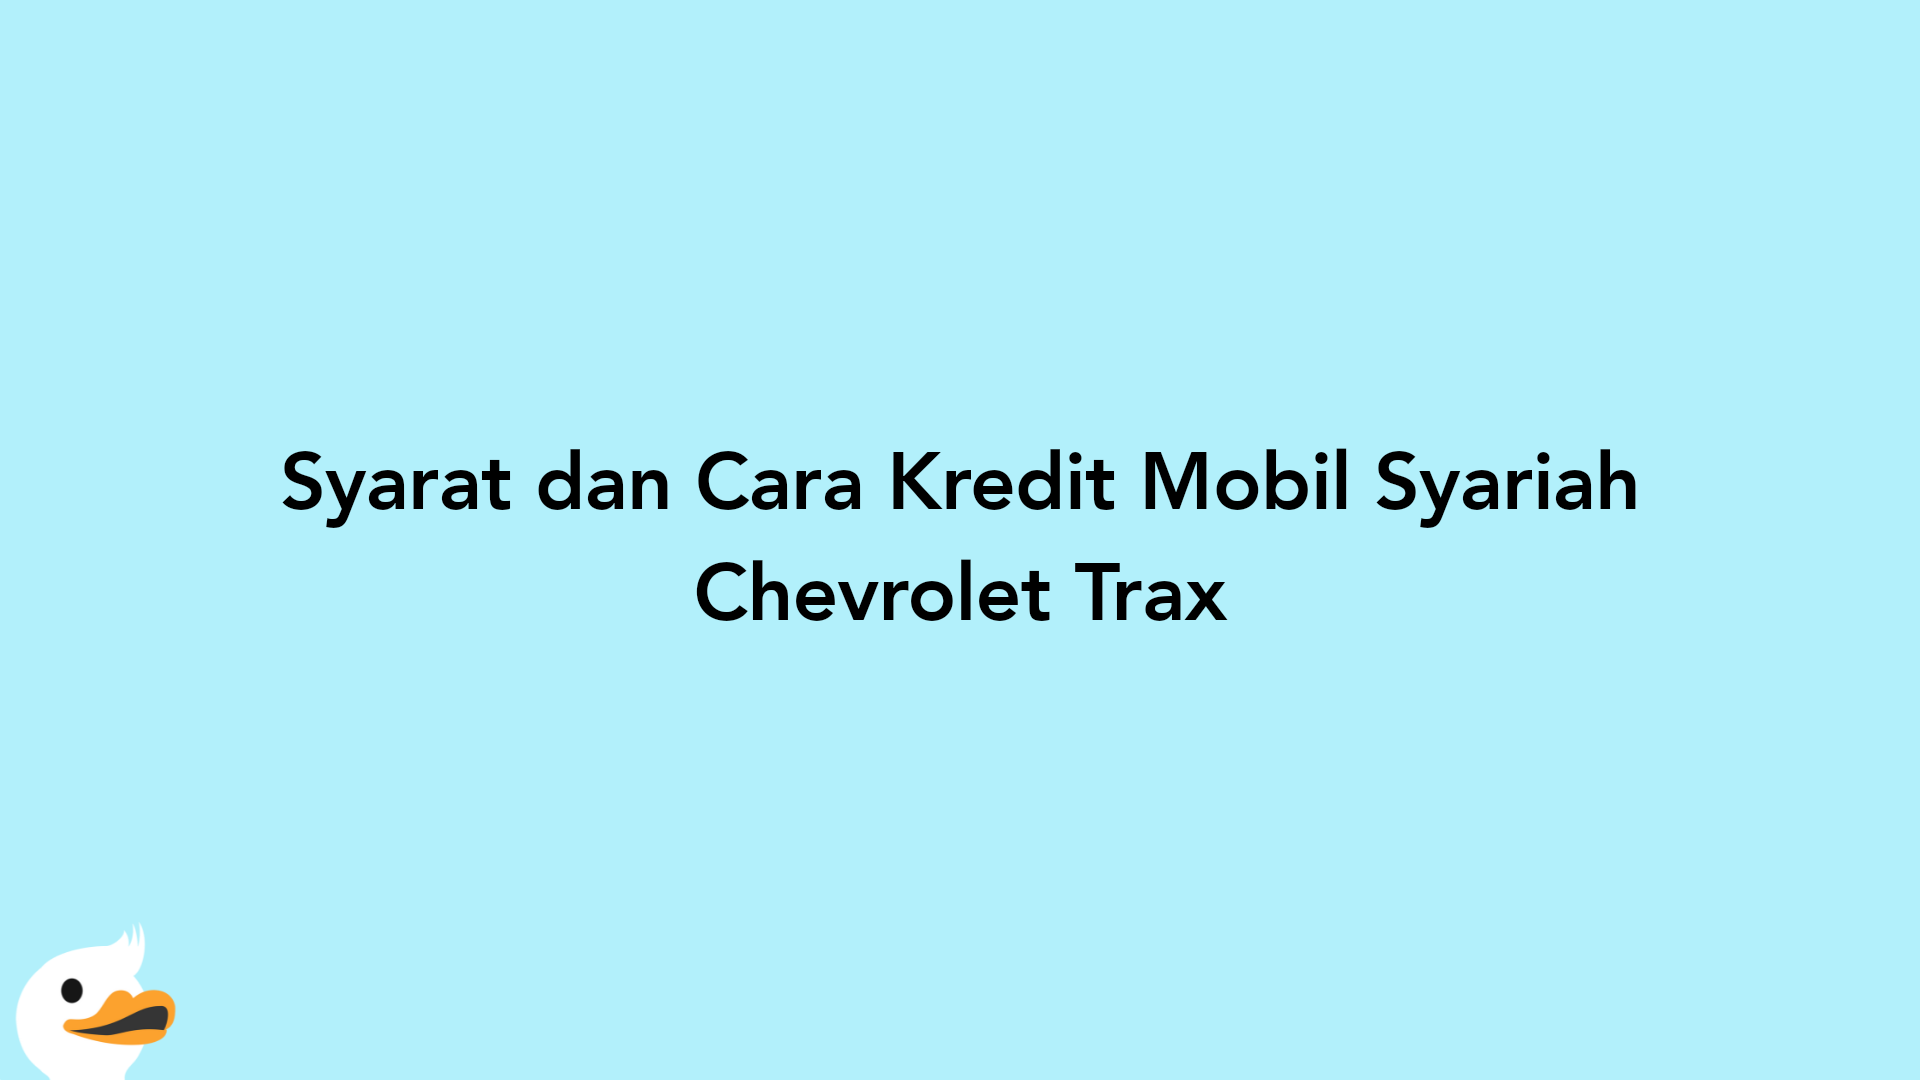 Syarat dan Cara Kredit Mobil Syariah Chevrolet Trax